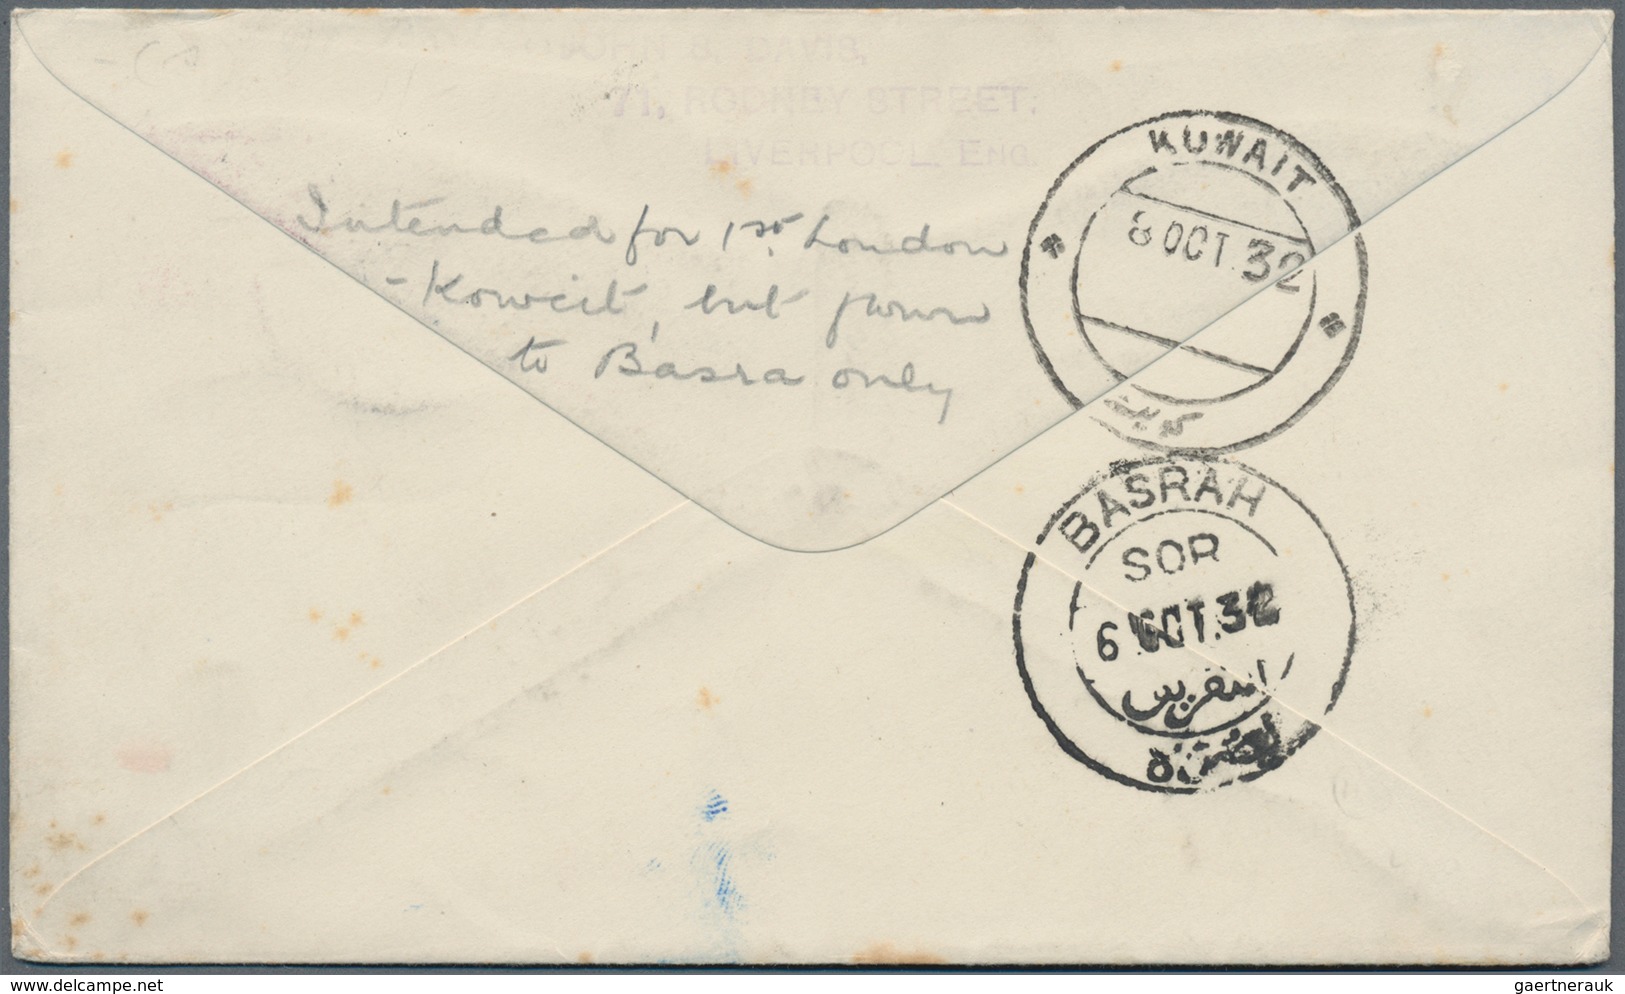 Kuwait: 1932 First Flight London-Kuwait: Airmail Cover From Trearddur Bay, Holy Island To Kuwait Int - Kuwait